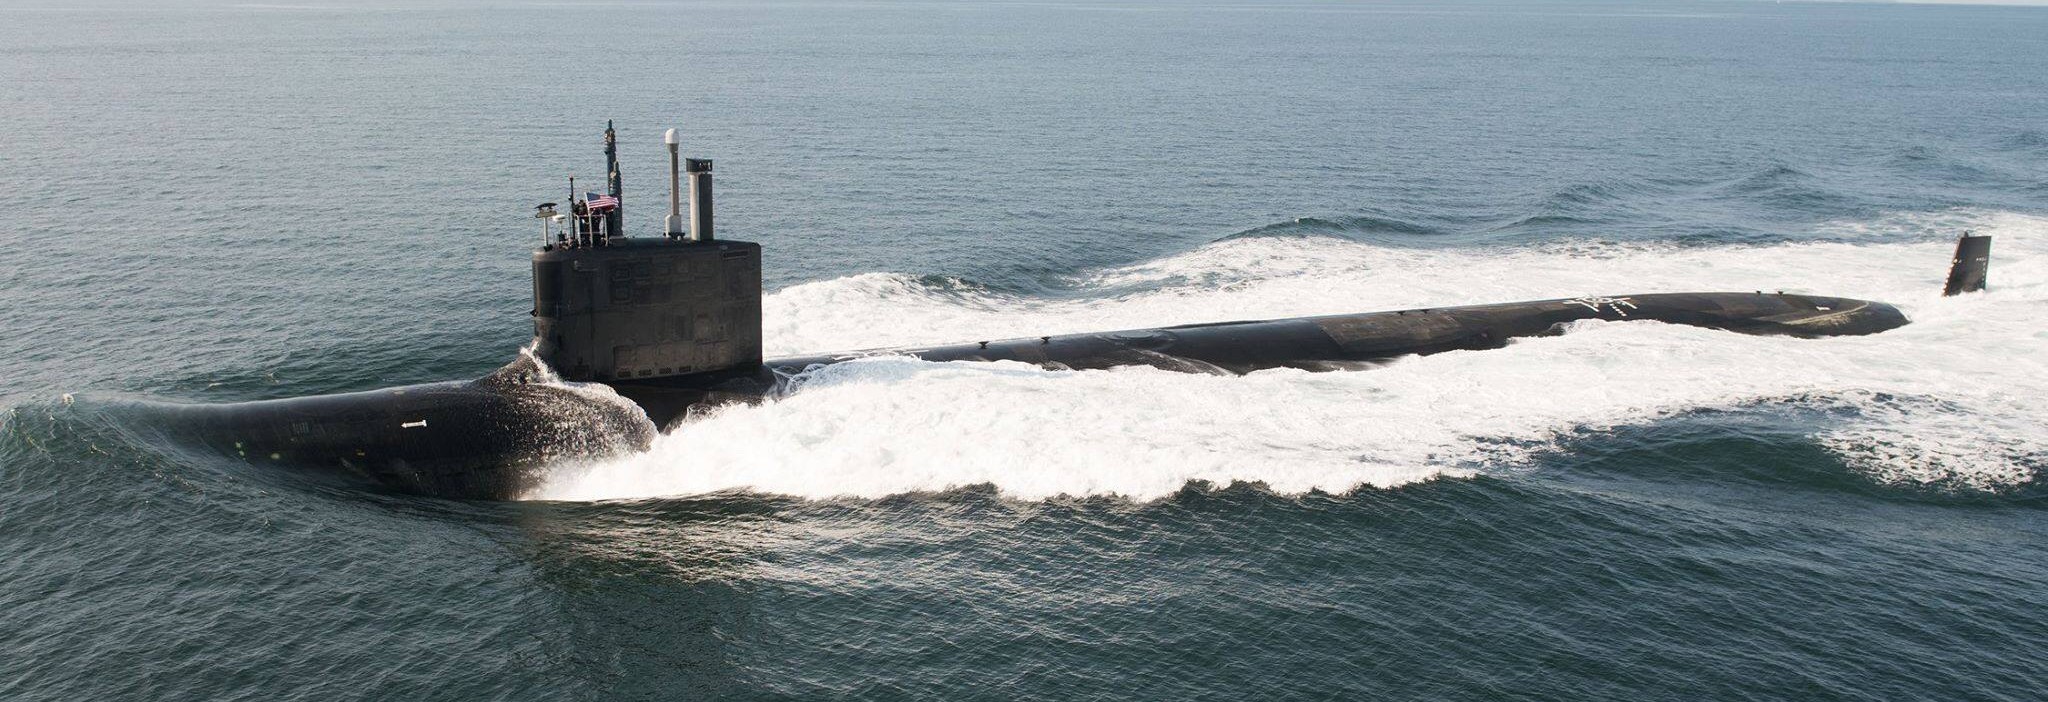 ssn-788 uss colorado virginia class attack submarine us navy 24x general dynamics electric boat groton